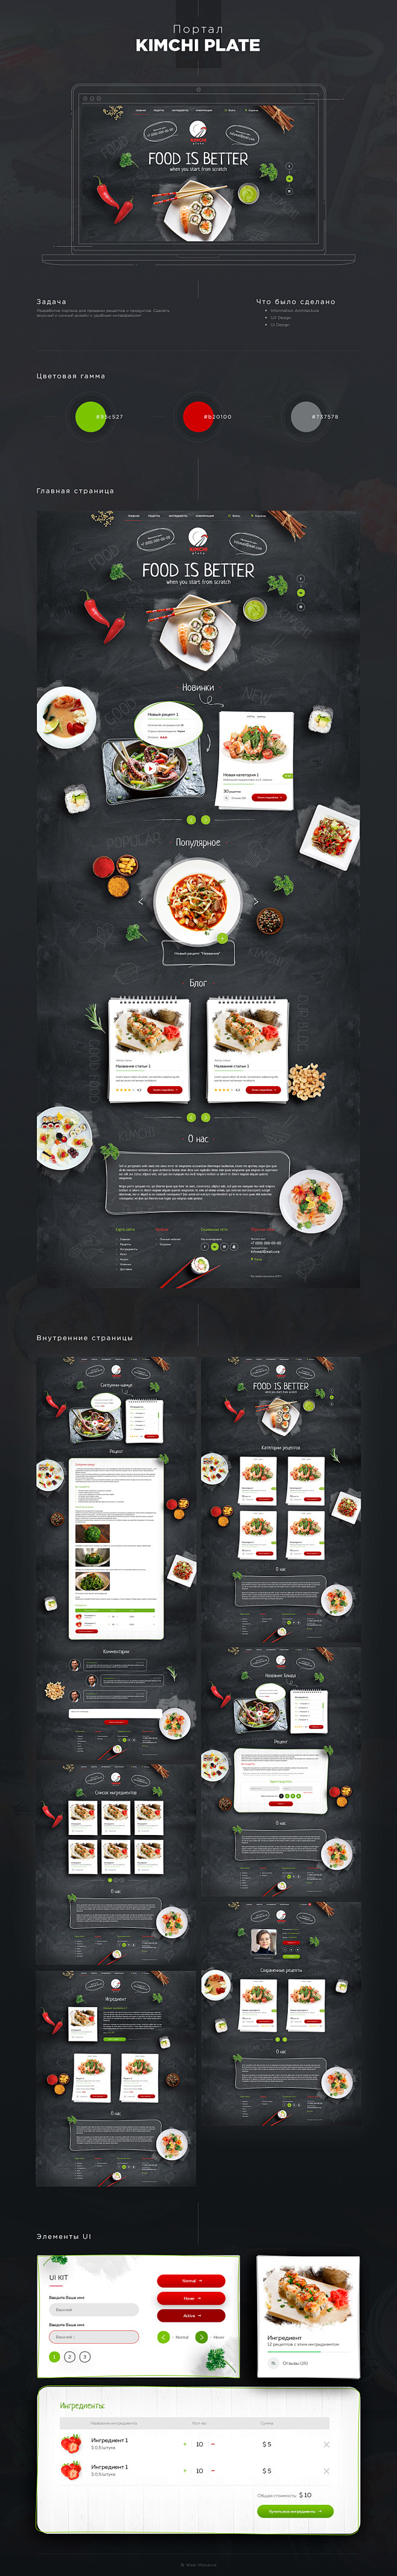 Food Portal Kimchi p...